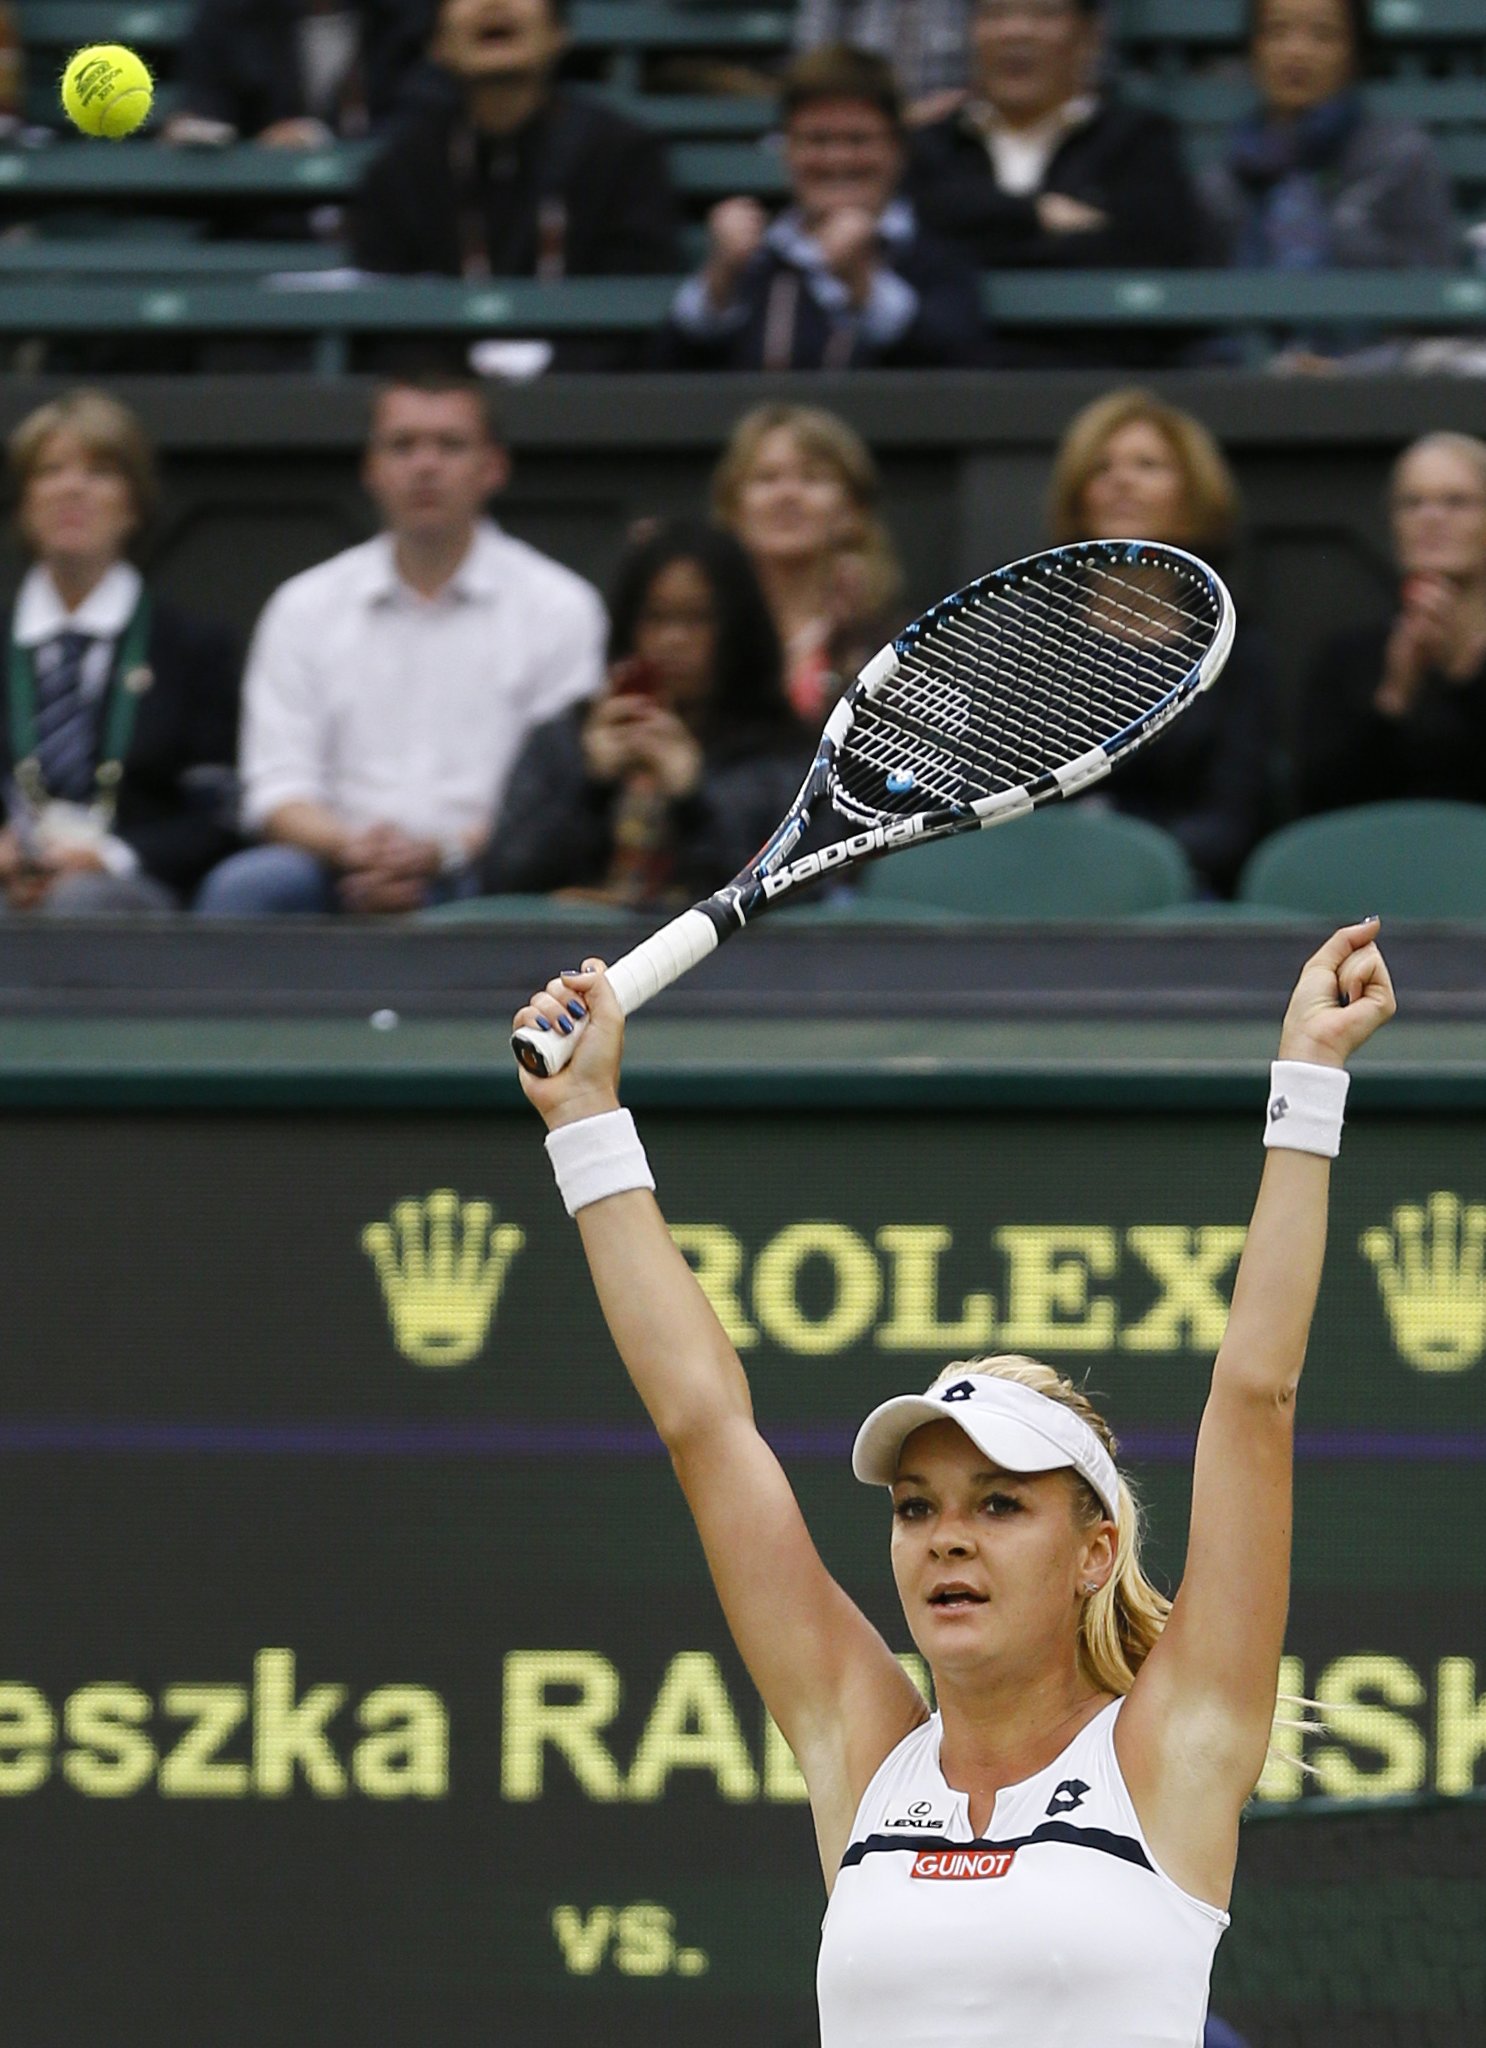 Agnieszka Radwanska of Poland reacts after defeating Li Na of China in the Wimbledon quarterfinals on Tuesday.